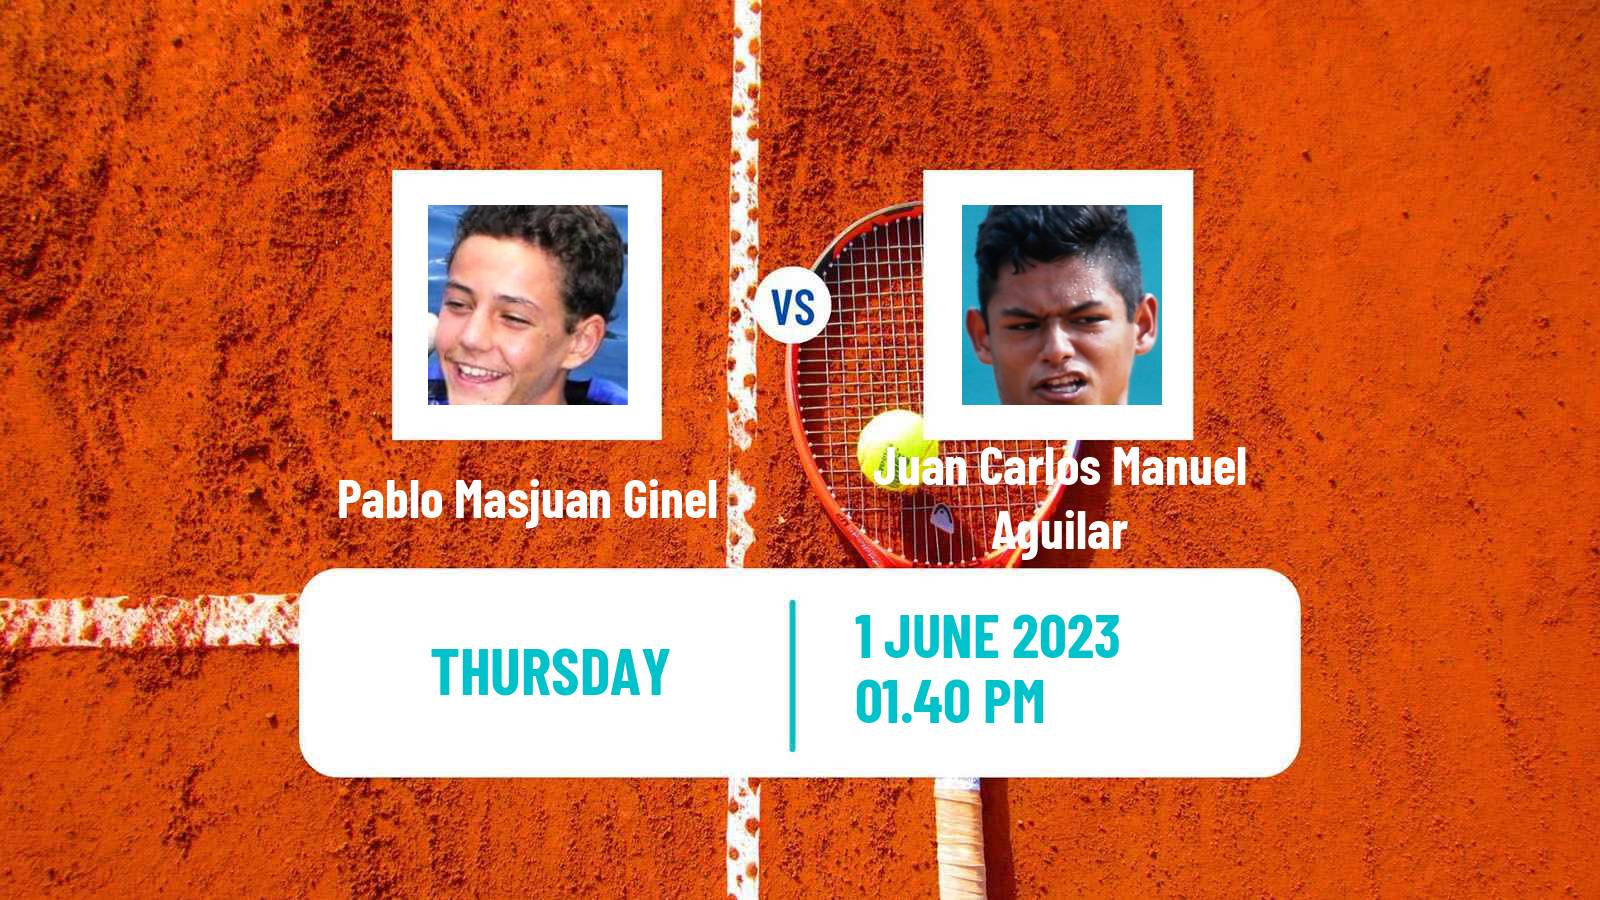 Tennis ITF M15 Rancho Santa Fe Ca Men Pablo Masjuan Ginel - Juan Carlos Manuel Aguilar